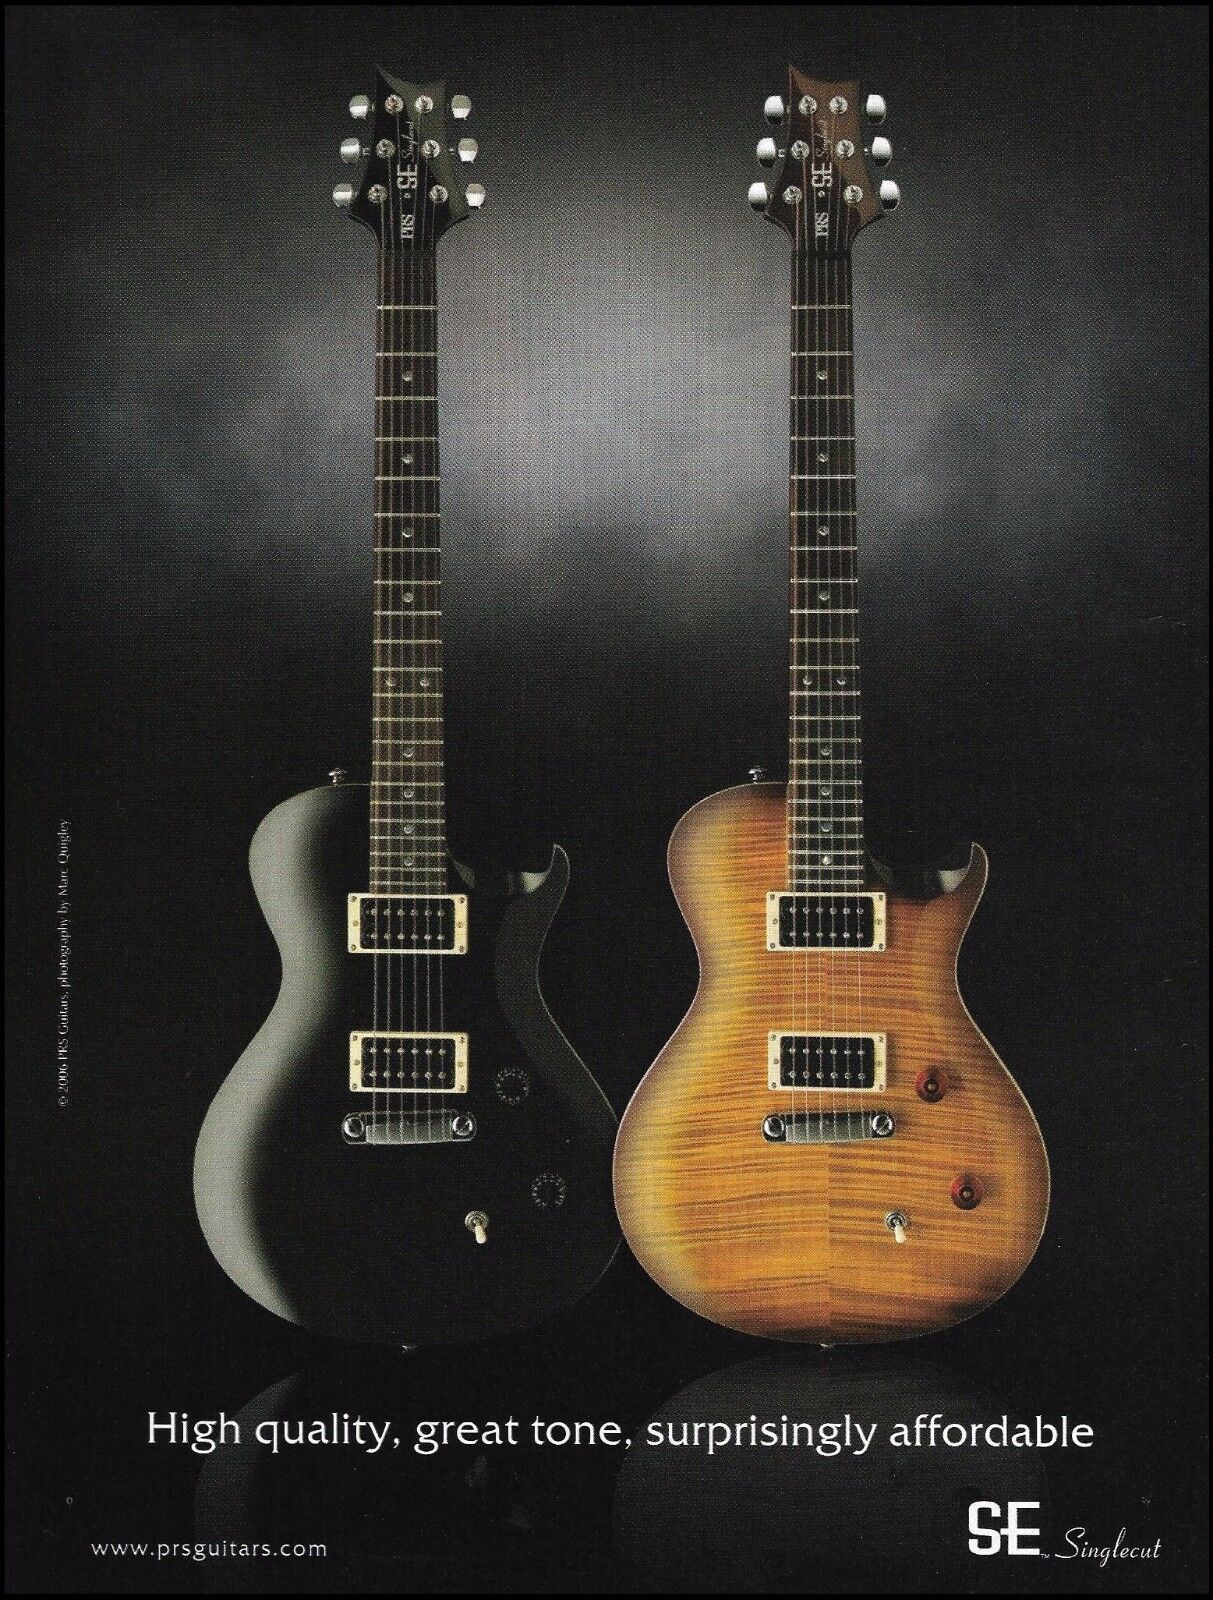 2006 PRS SE Singlecut Series guitar advertisement 8 x 11 original ad print